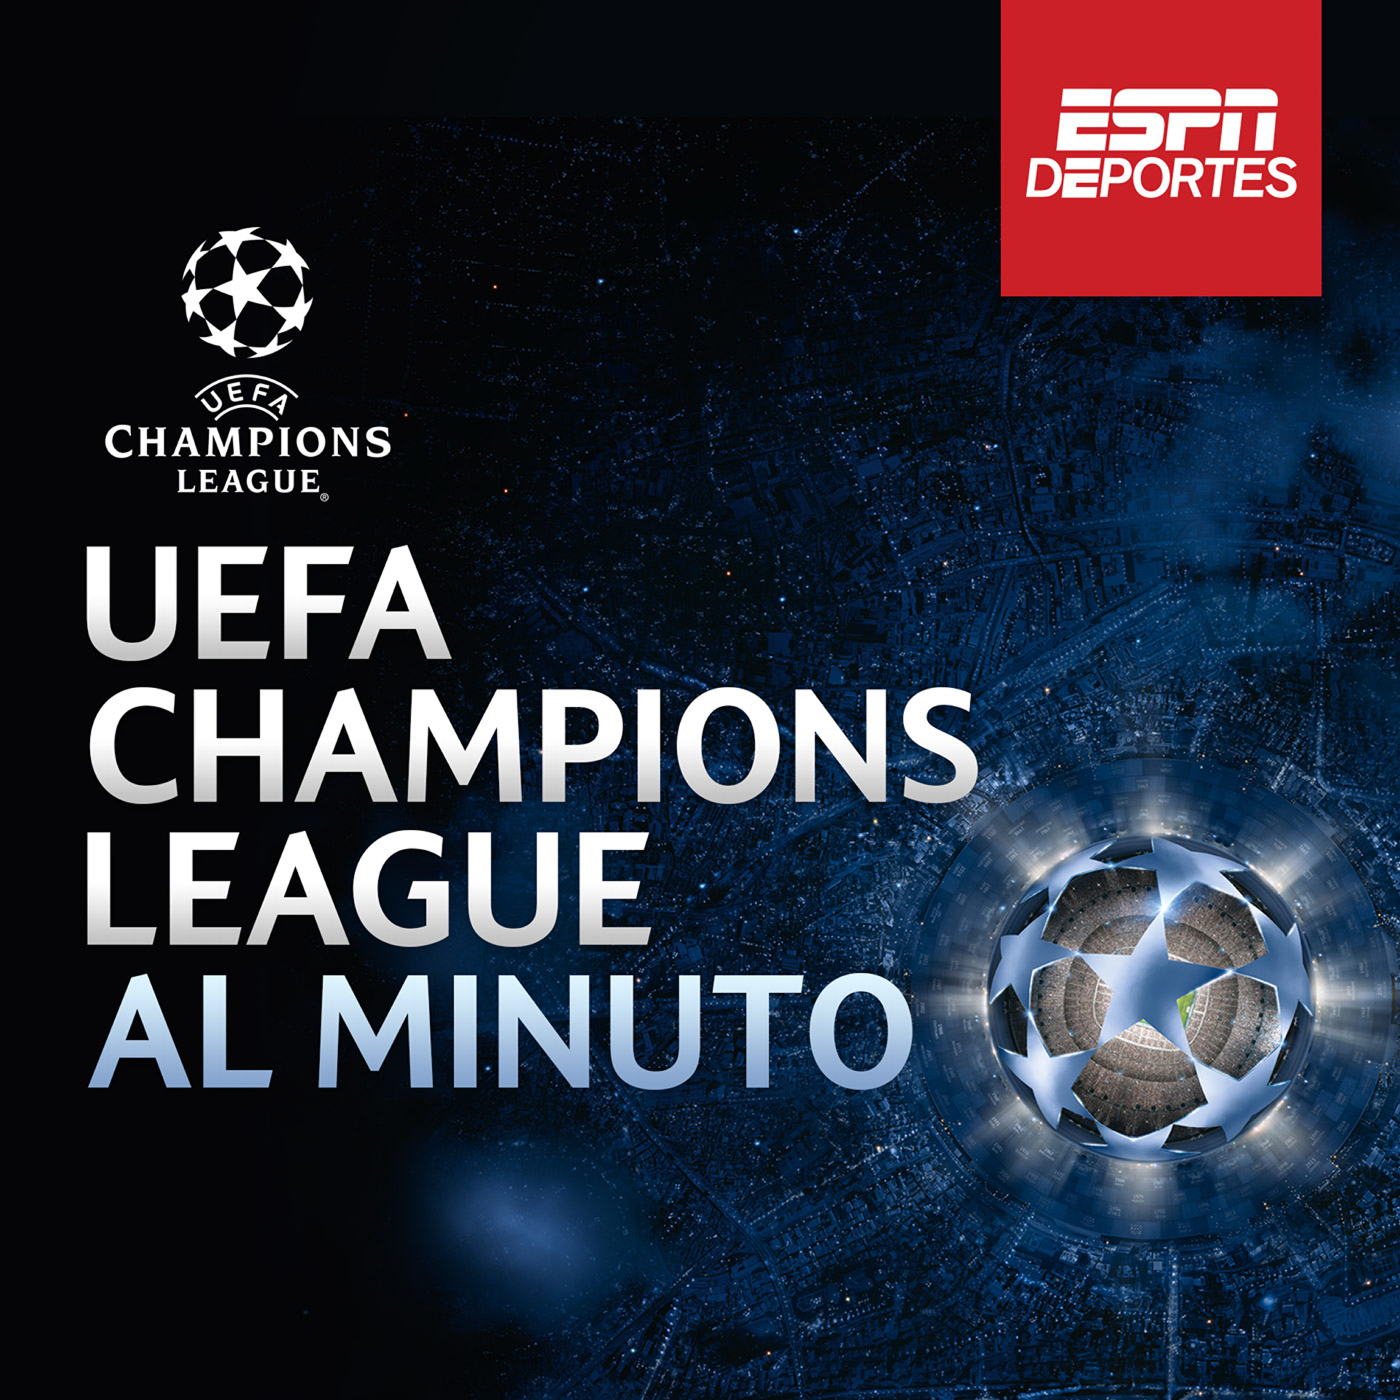 UEFA Champions League Al Minuto